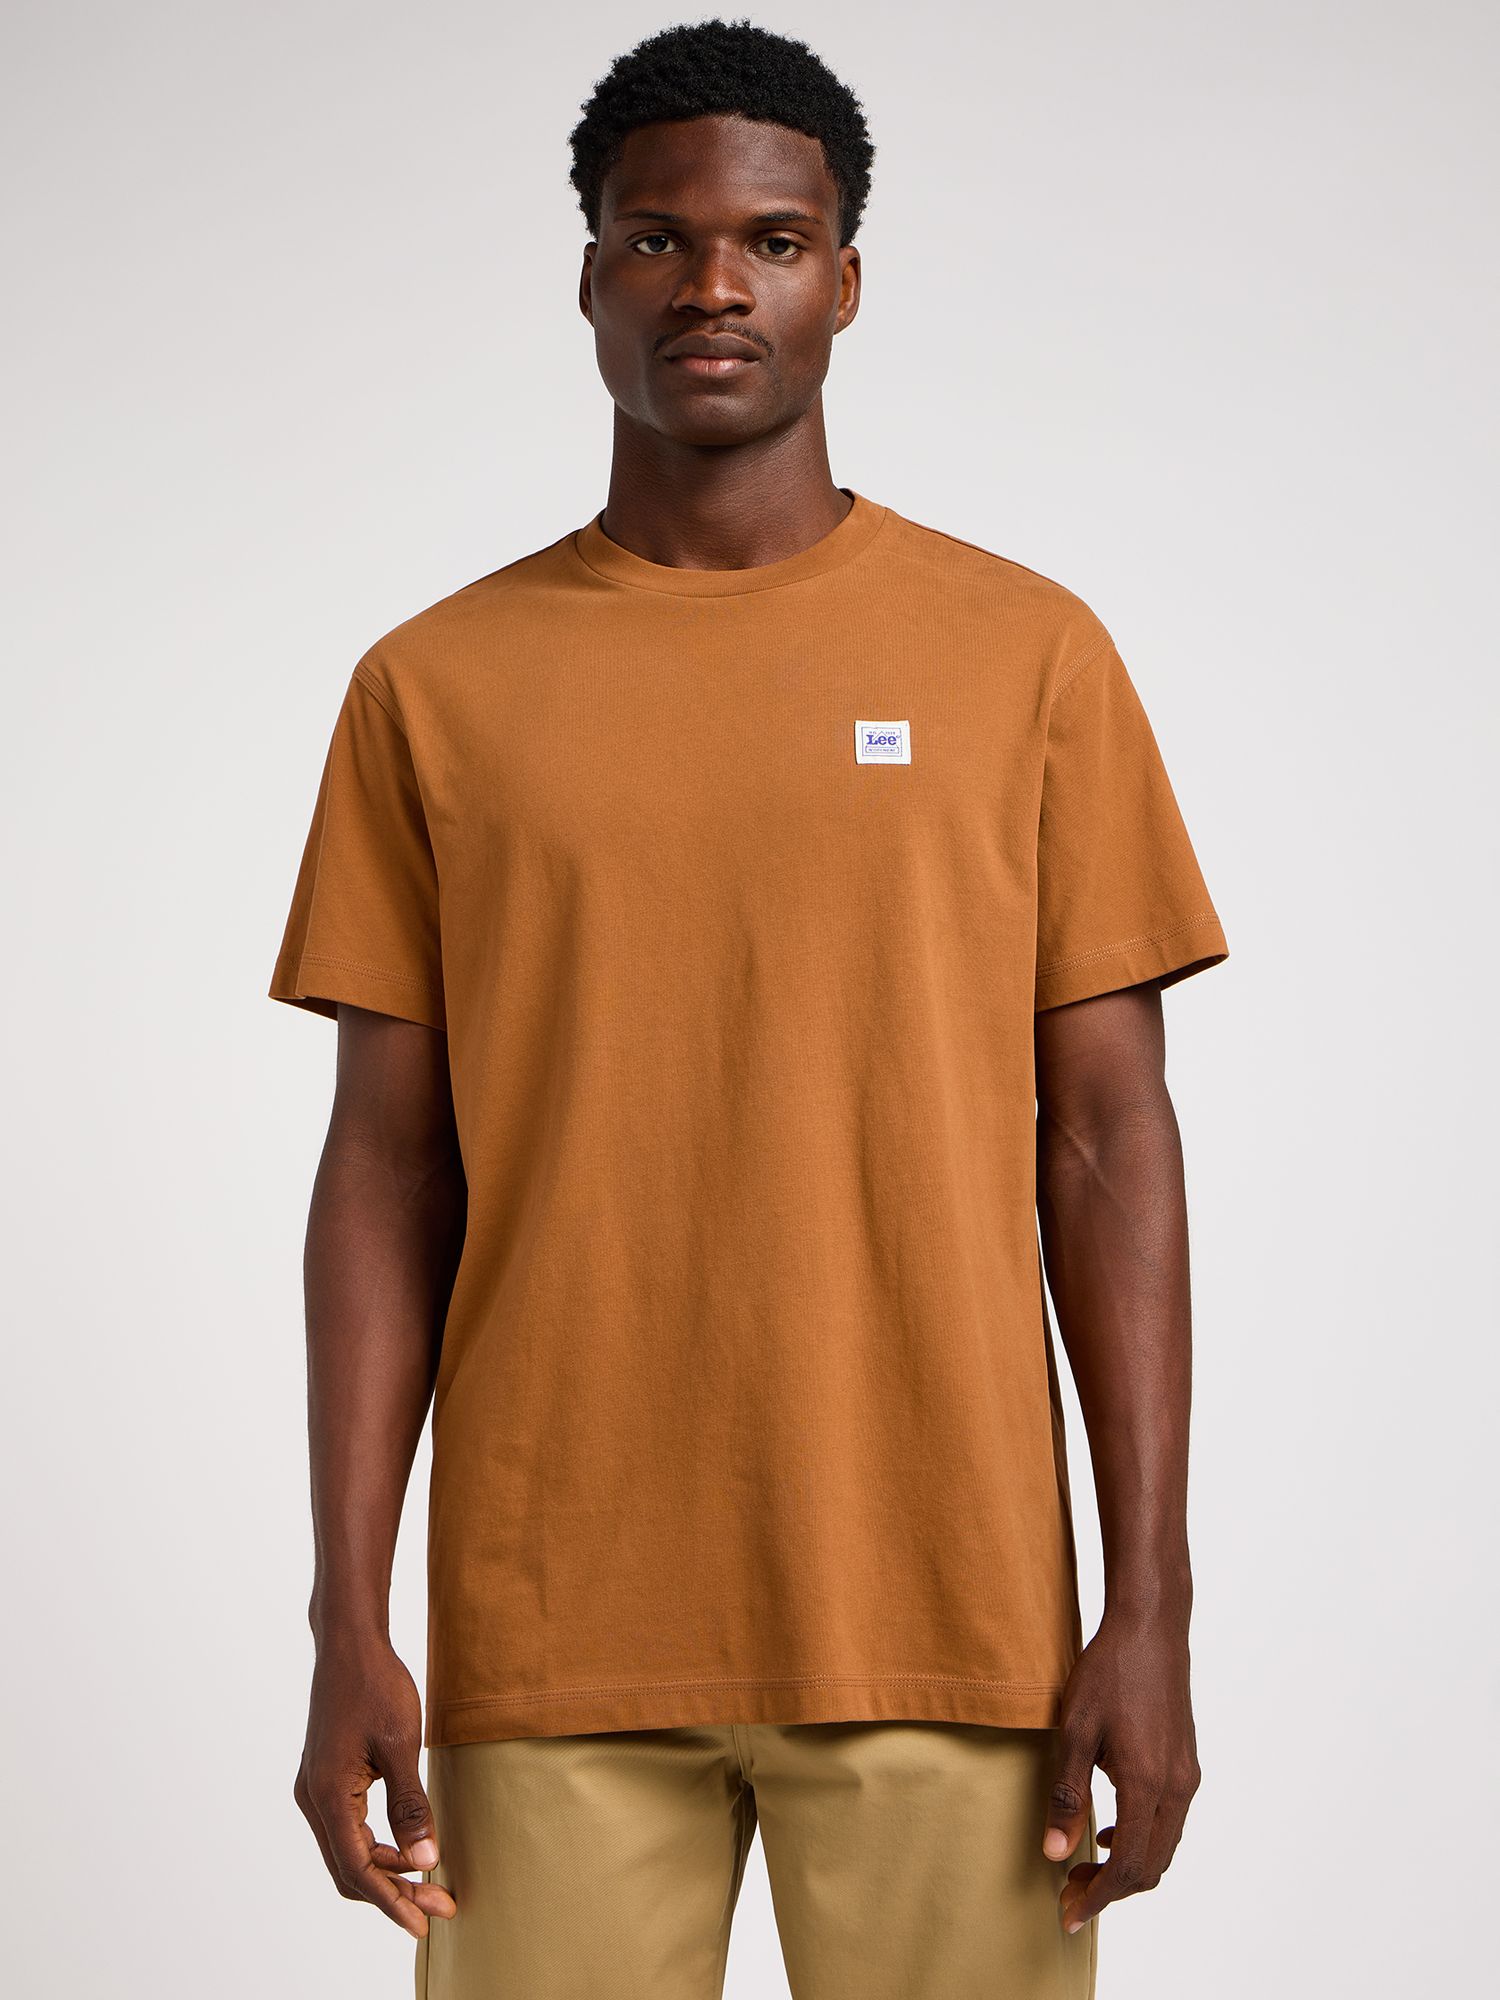 Lee Workwear Heritage Logo Cotton T-Shirt, Acorn, XXL